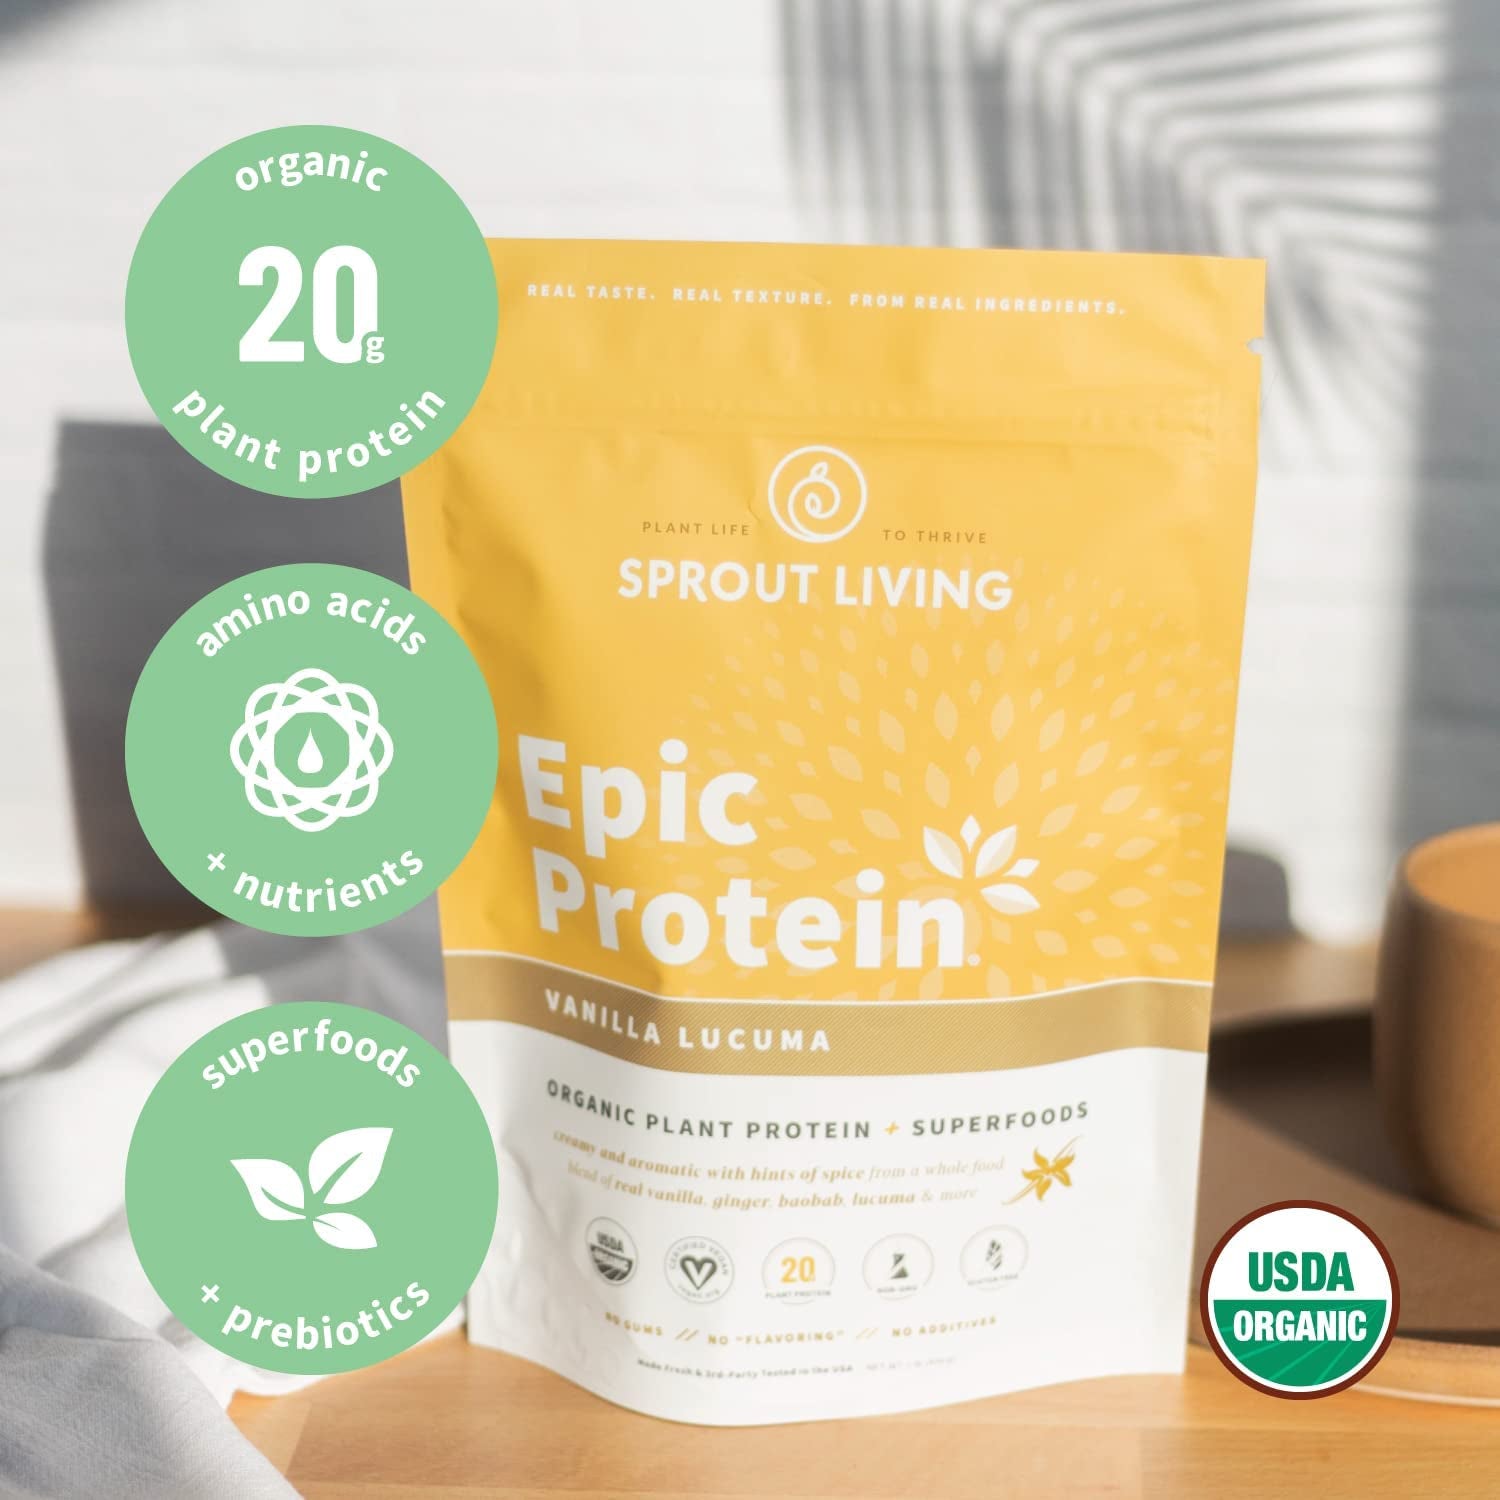 Sprout Living Epic Protein Bundle - Vanilla Lucuma & Pro Collagen (20G Organic Plant-Based Protein Powder, Vegan, Gluten Free, Superfoods) | 1Lb, 12 Servings